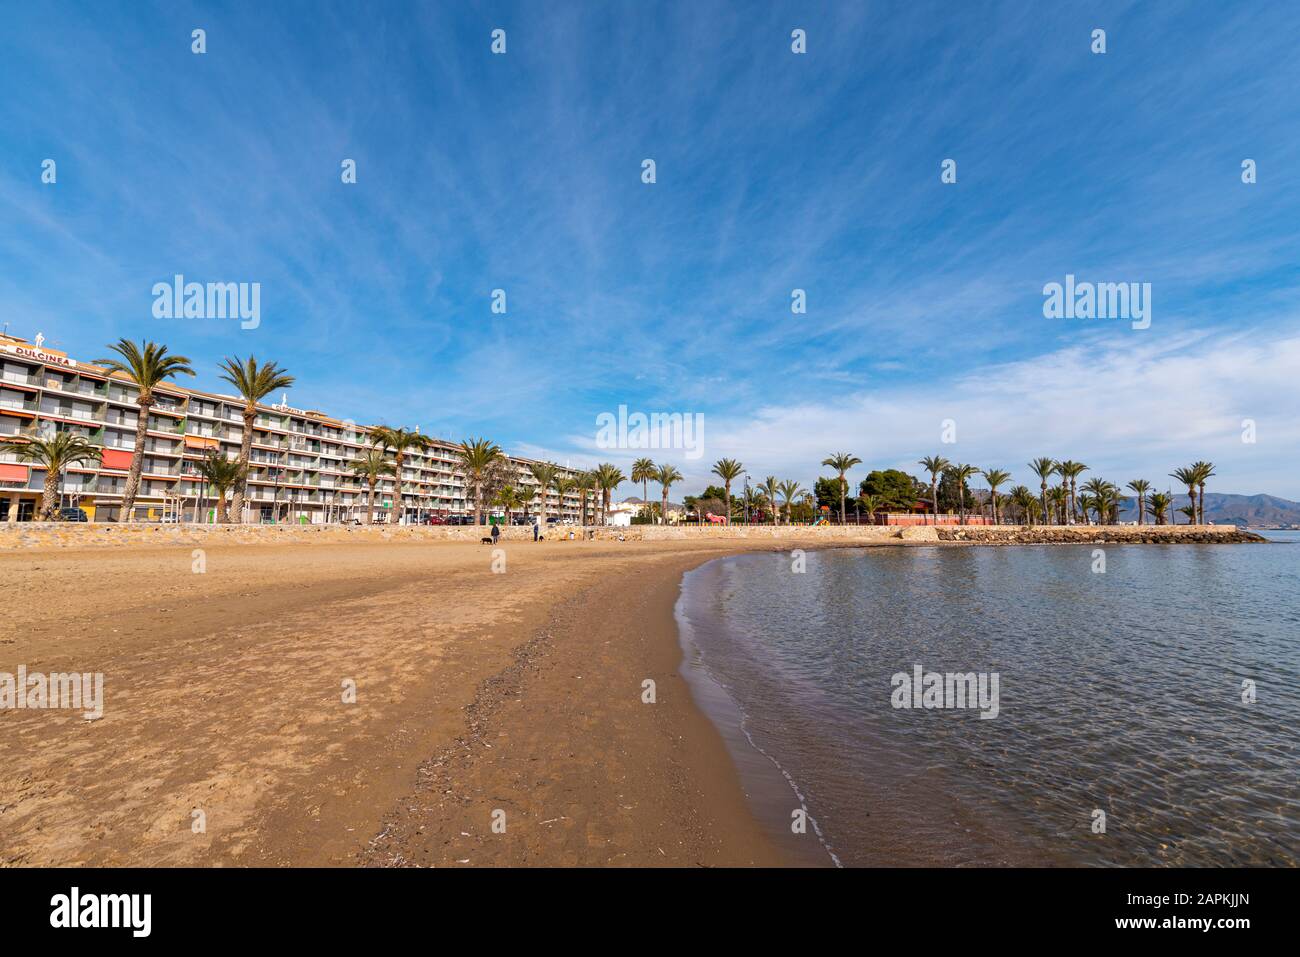 Hotels on the beach front at Puerto de Mazarron, Region de Murcia, Costa Calida, Spain. Named statues on roofs. Mediterranean sea apartments Stock Photo